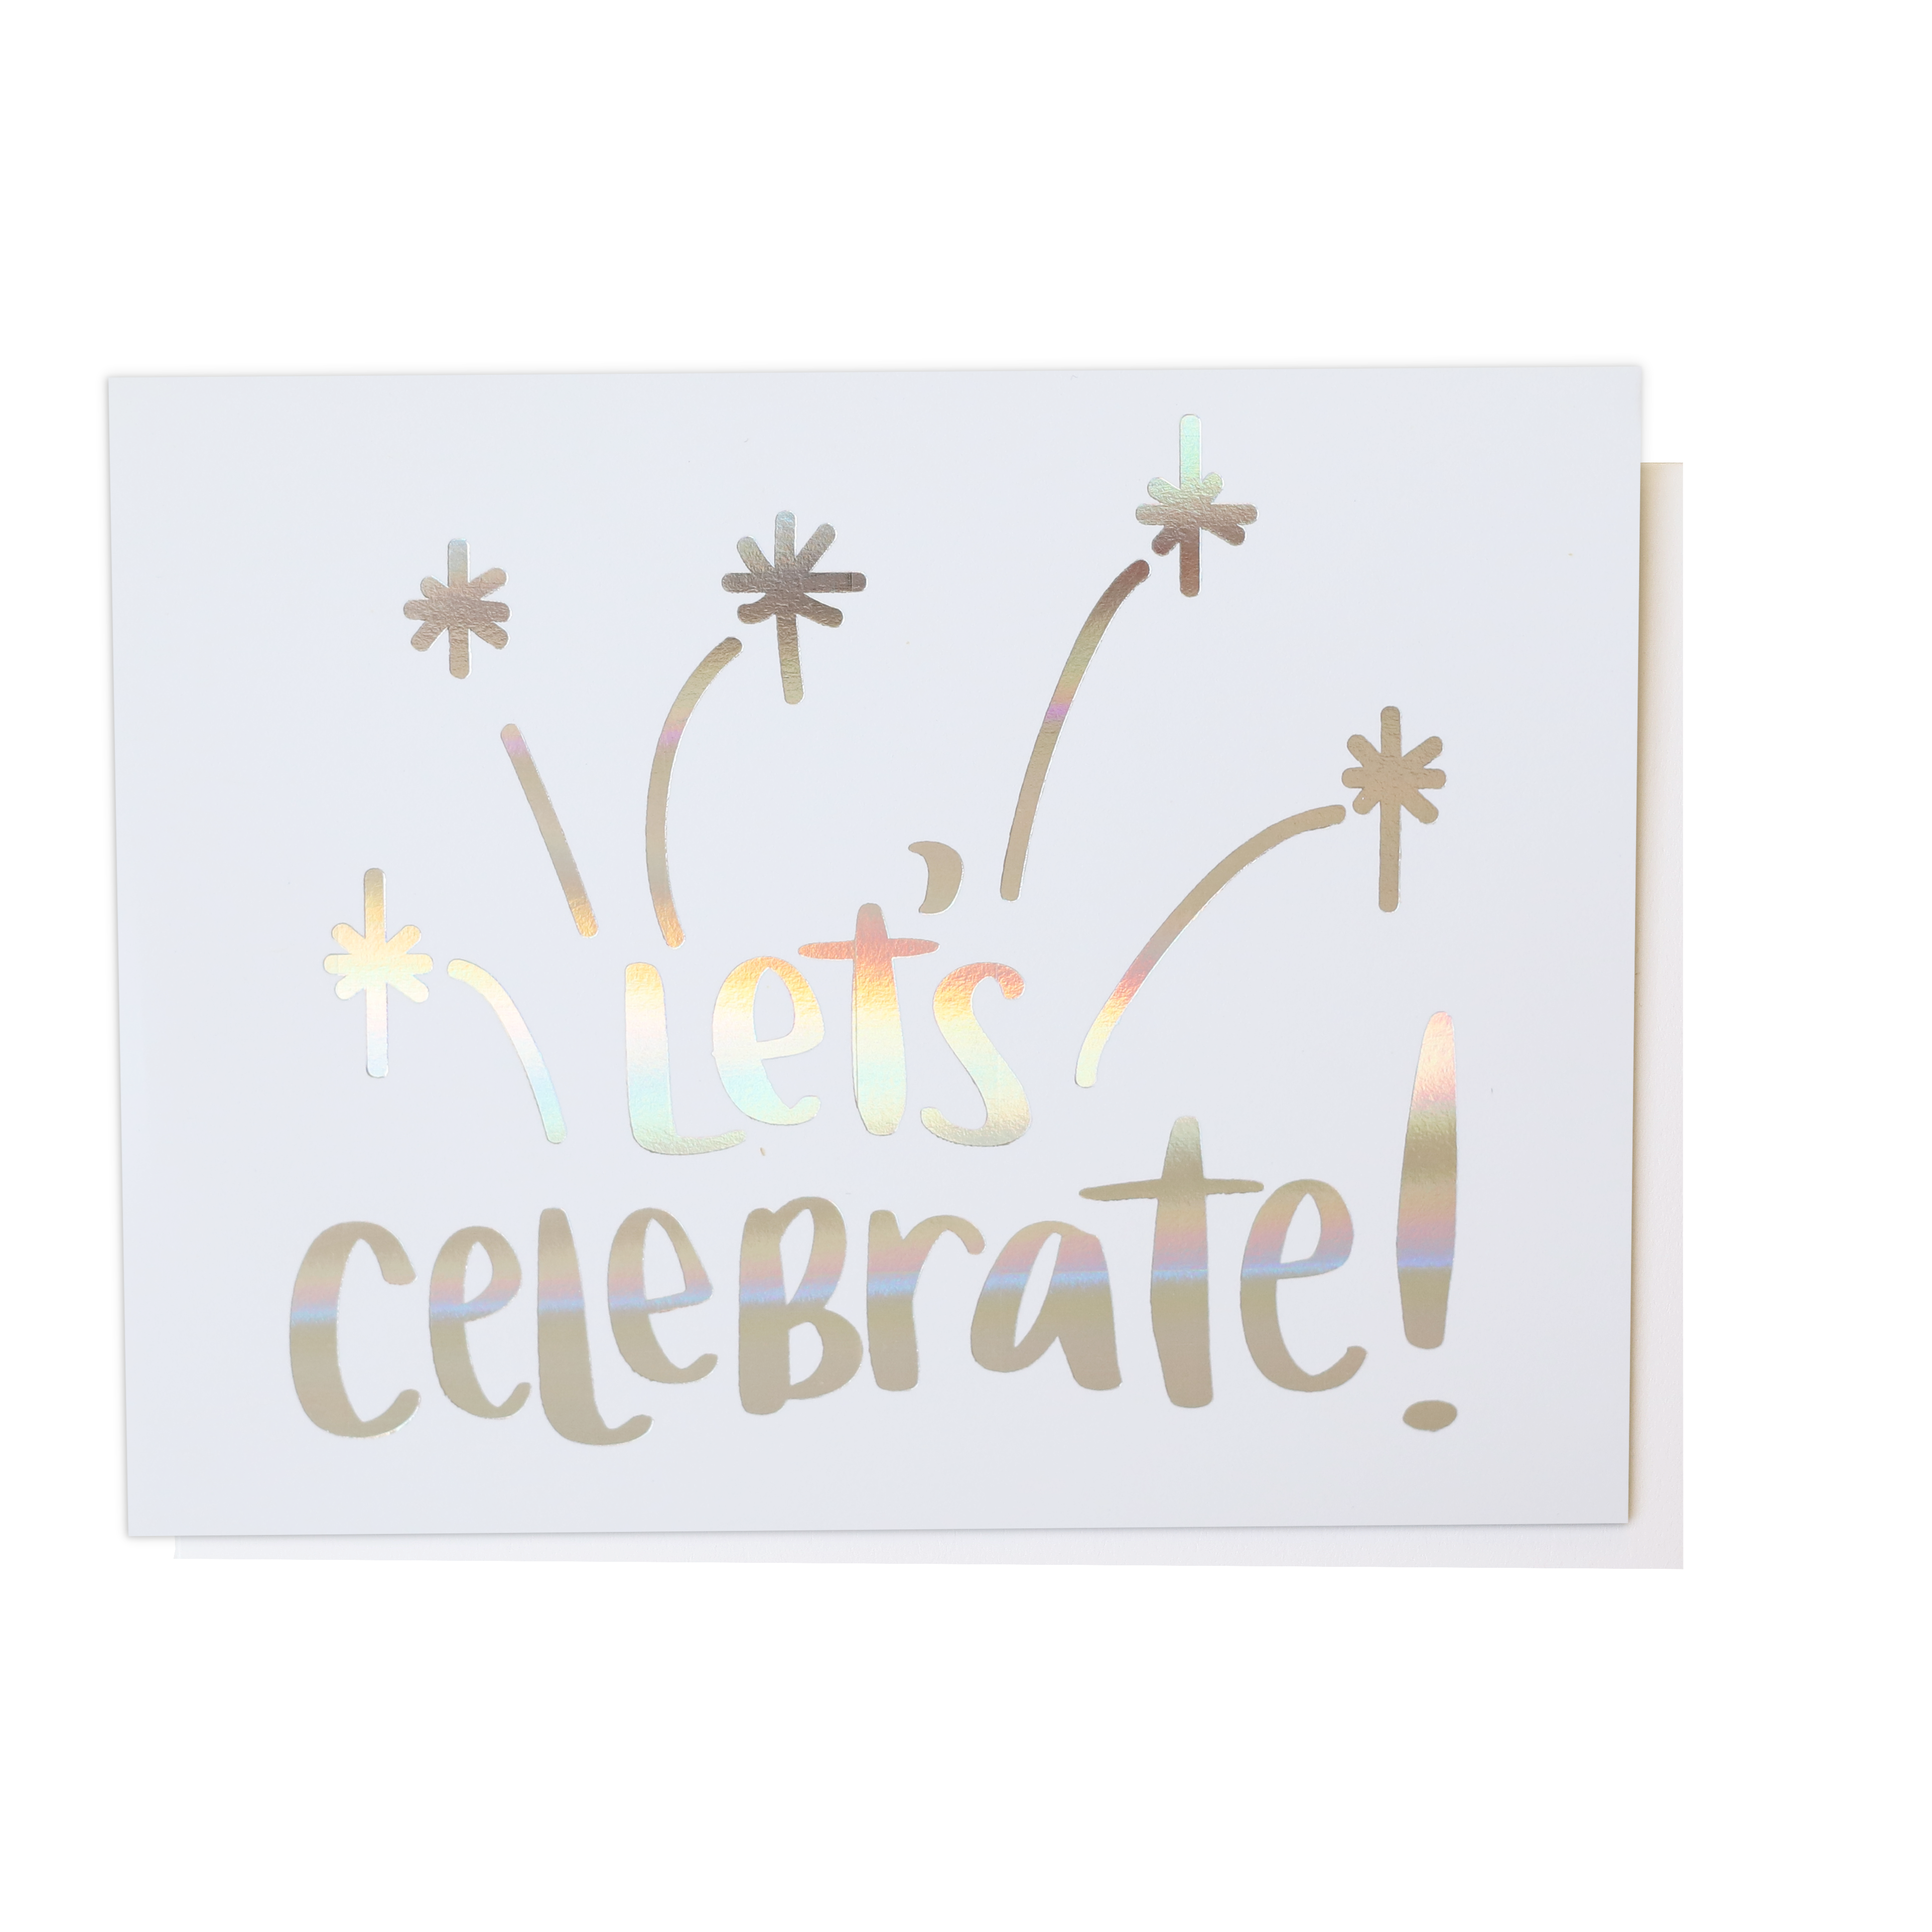 Let's Celebrate!, Greeting Card